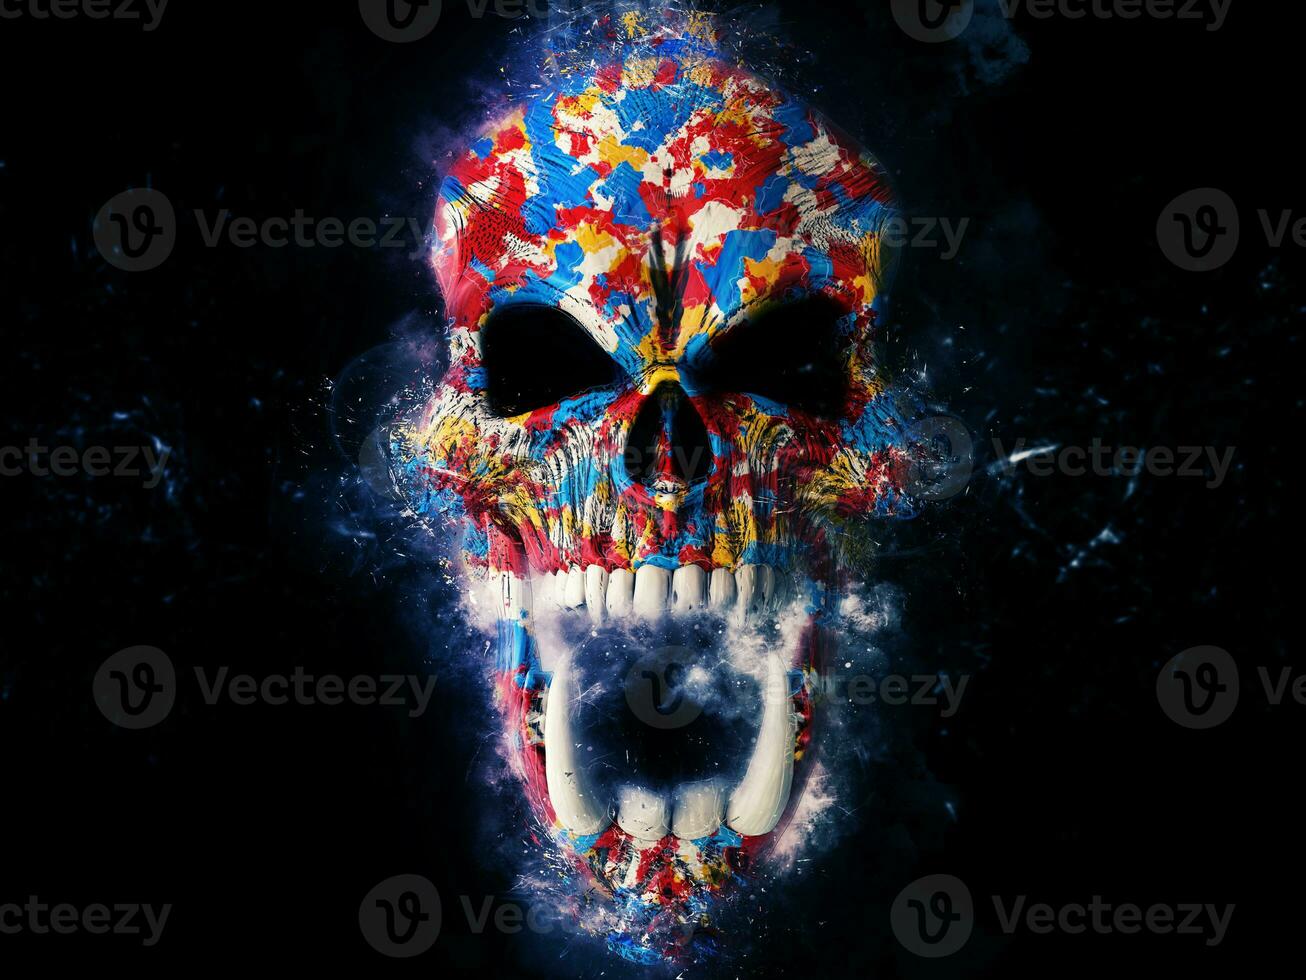 Colorful skull with white teeth - grunge style illustration photo